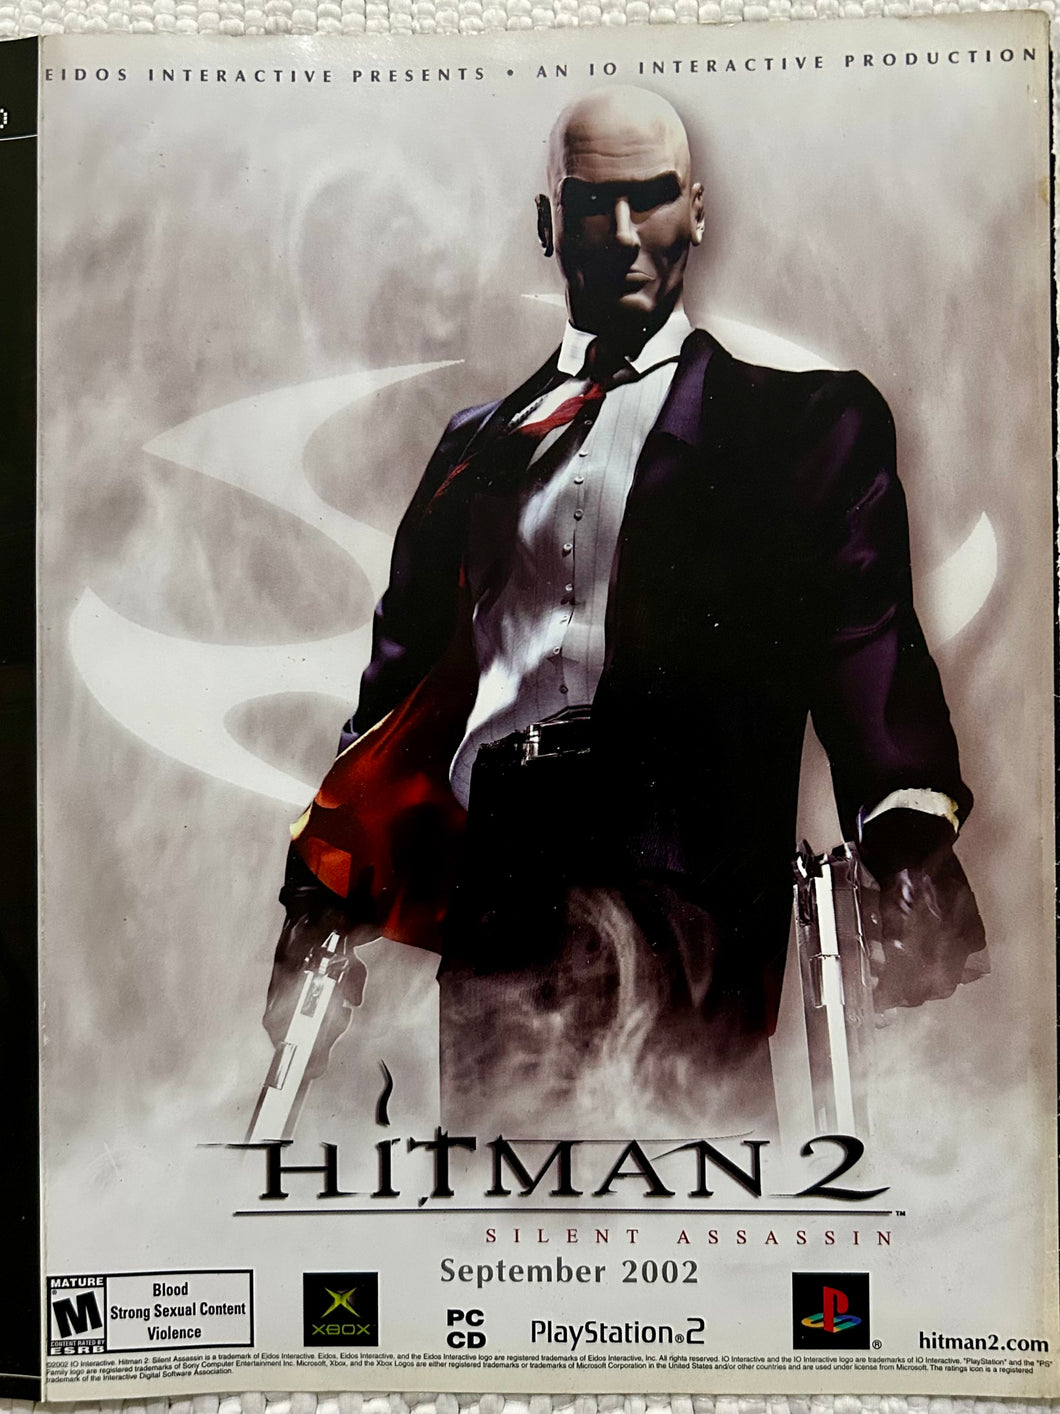 Hitman 2: Silent Assassin - PS2 Xbox PC - Original Vintage Advertisement - Print Ads - Laminated A4 Poster